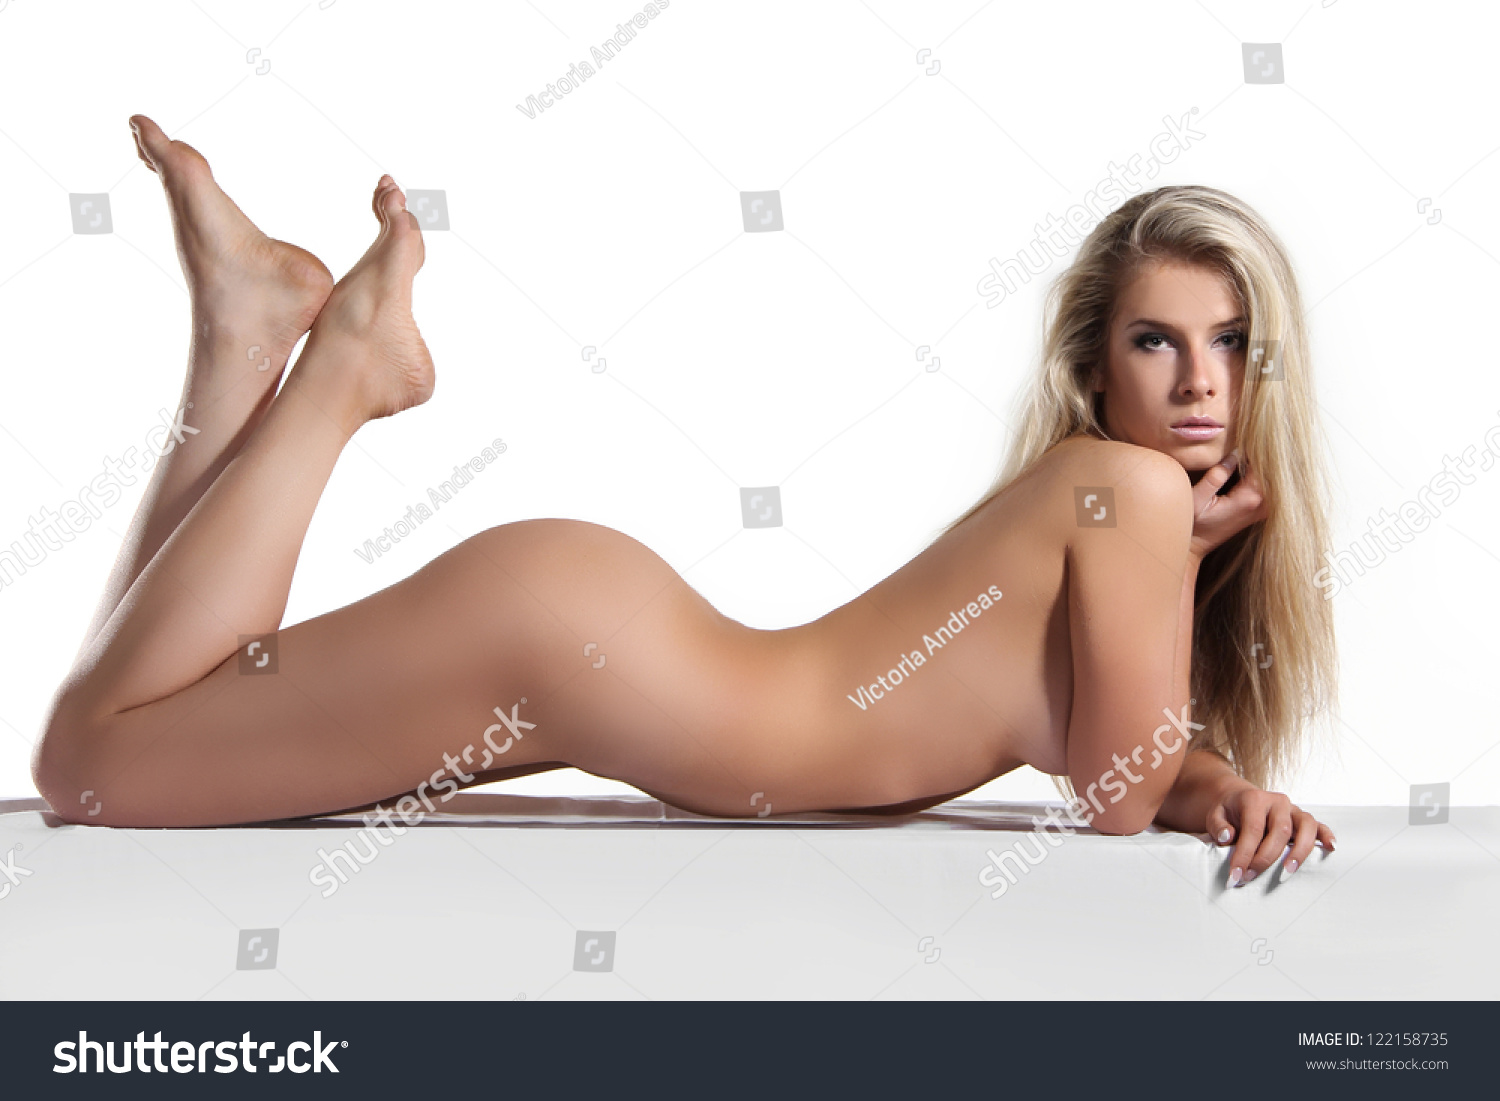 Woman Photo Nude 120